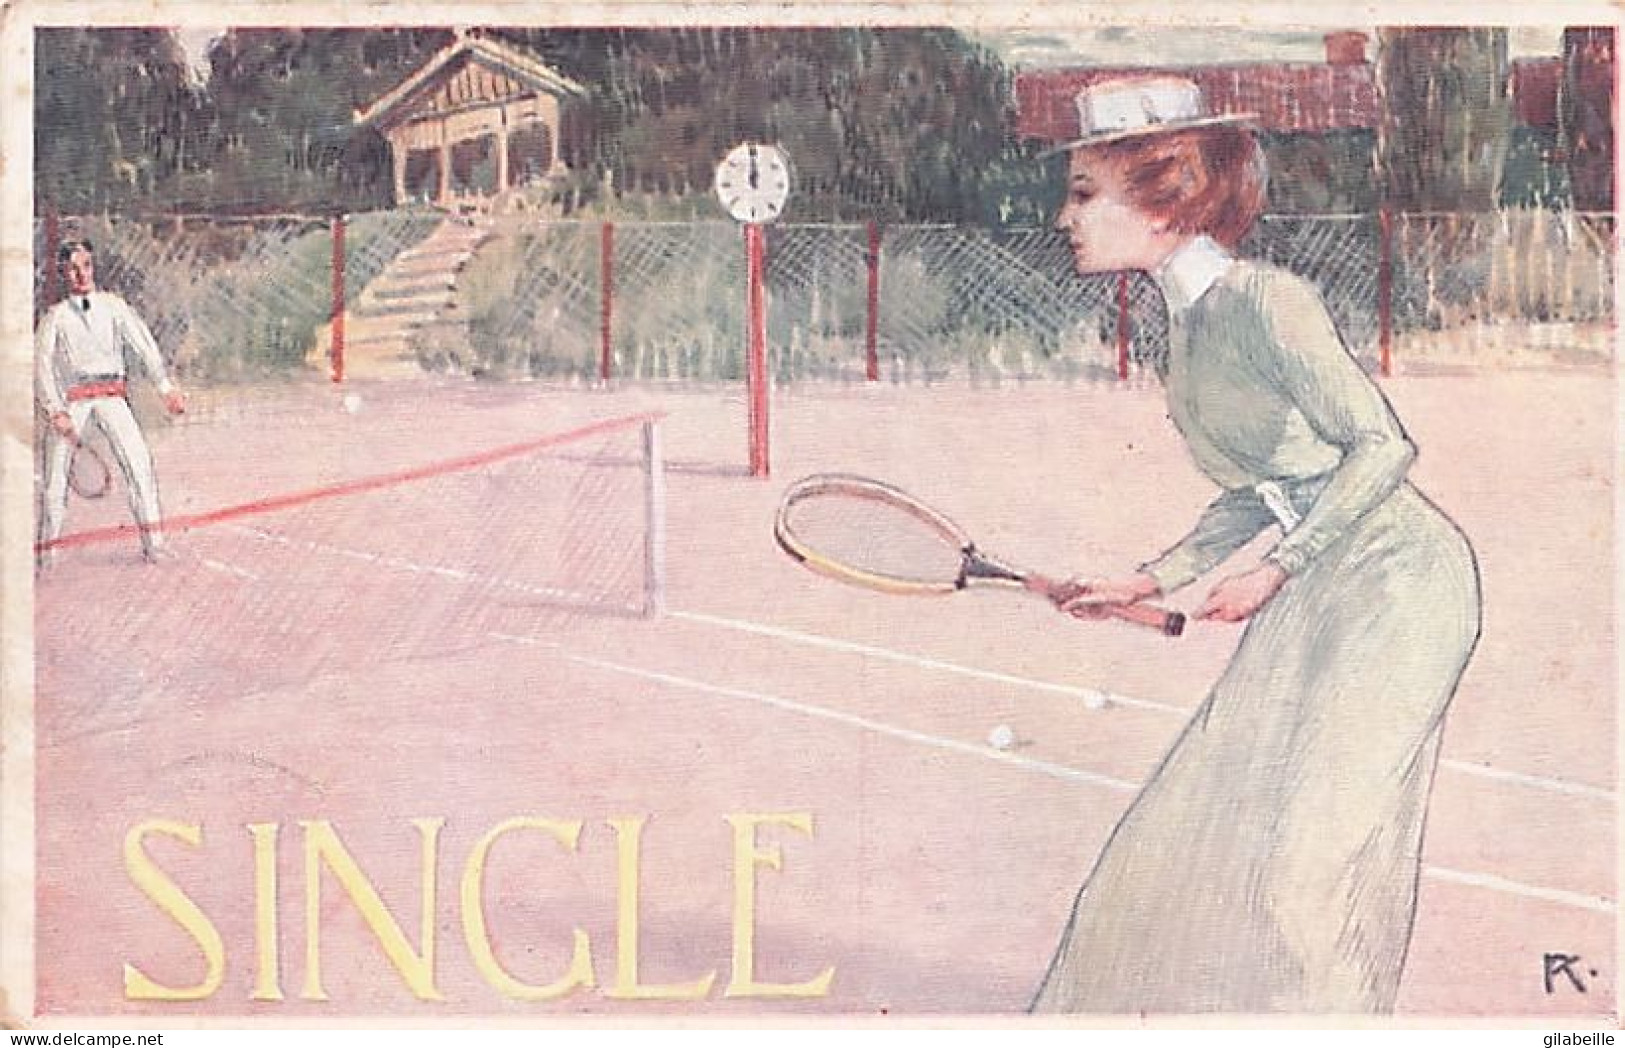 Sports - TENNIS - "SINGLE E " - Illustrateur : Signé K. - 1908 - Tennis